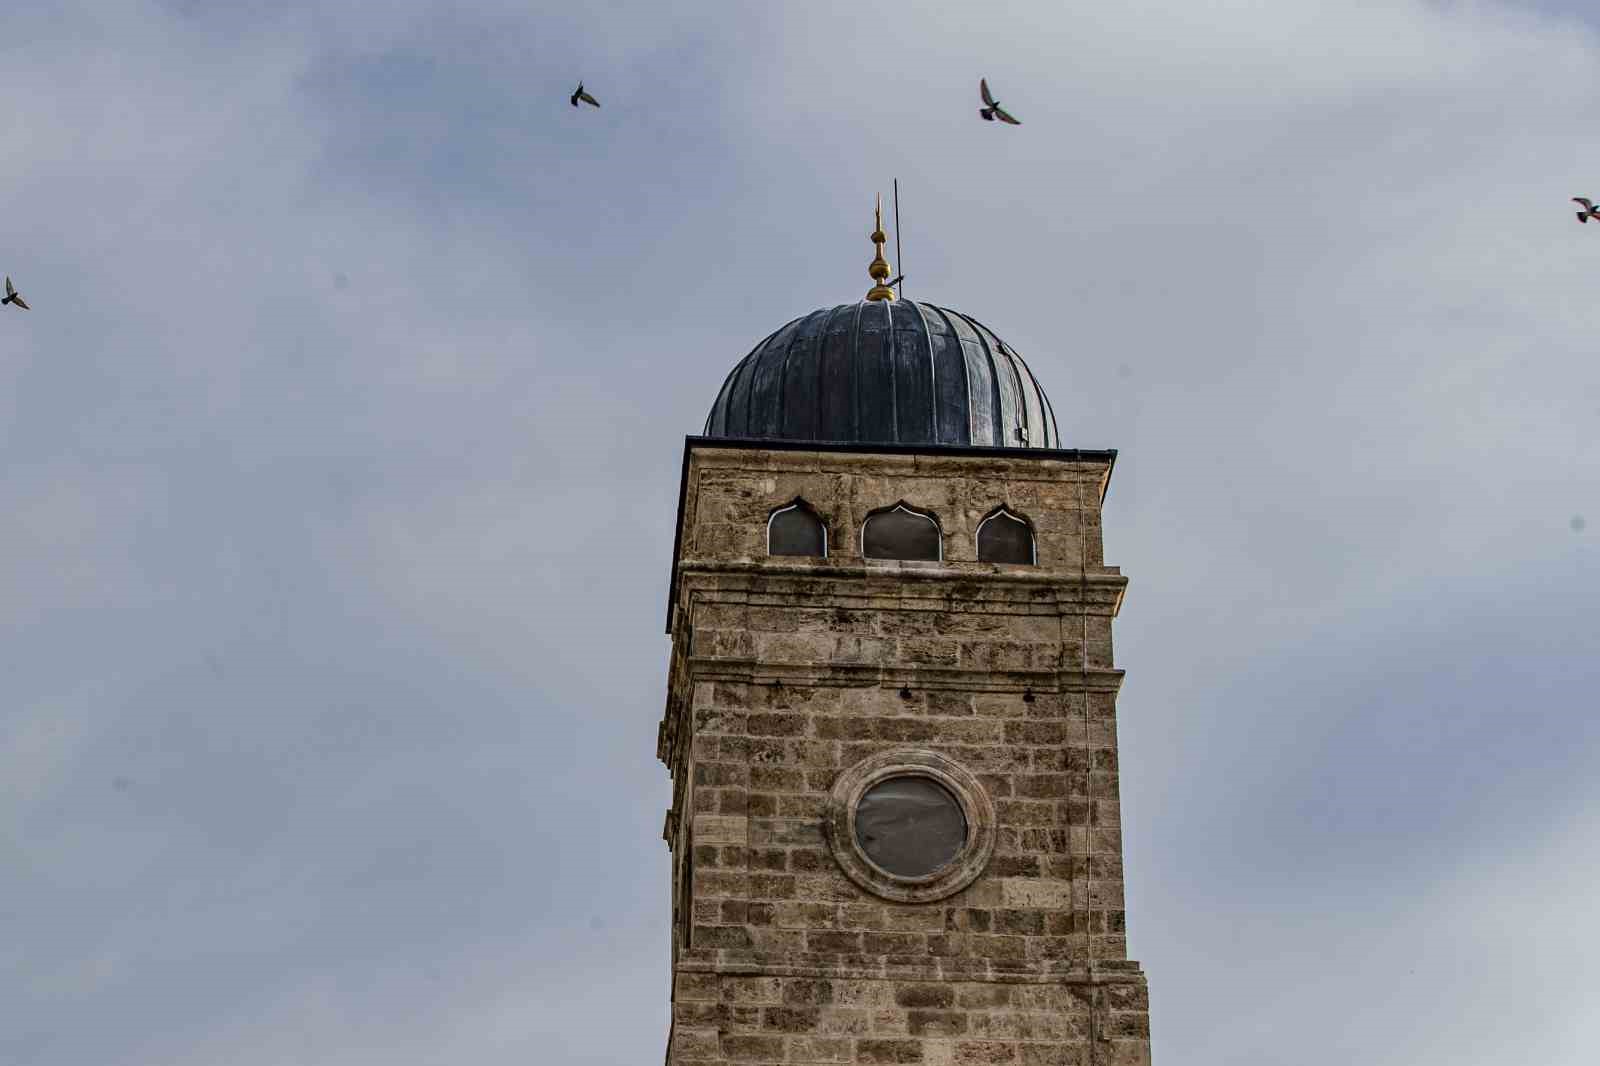 Antalyanin Simgesi Saat Kulesi Saatine Kavusuyor 2 Ps6Ivdgm